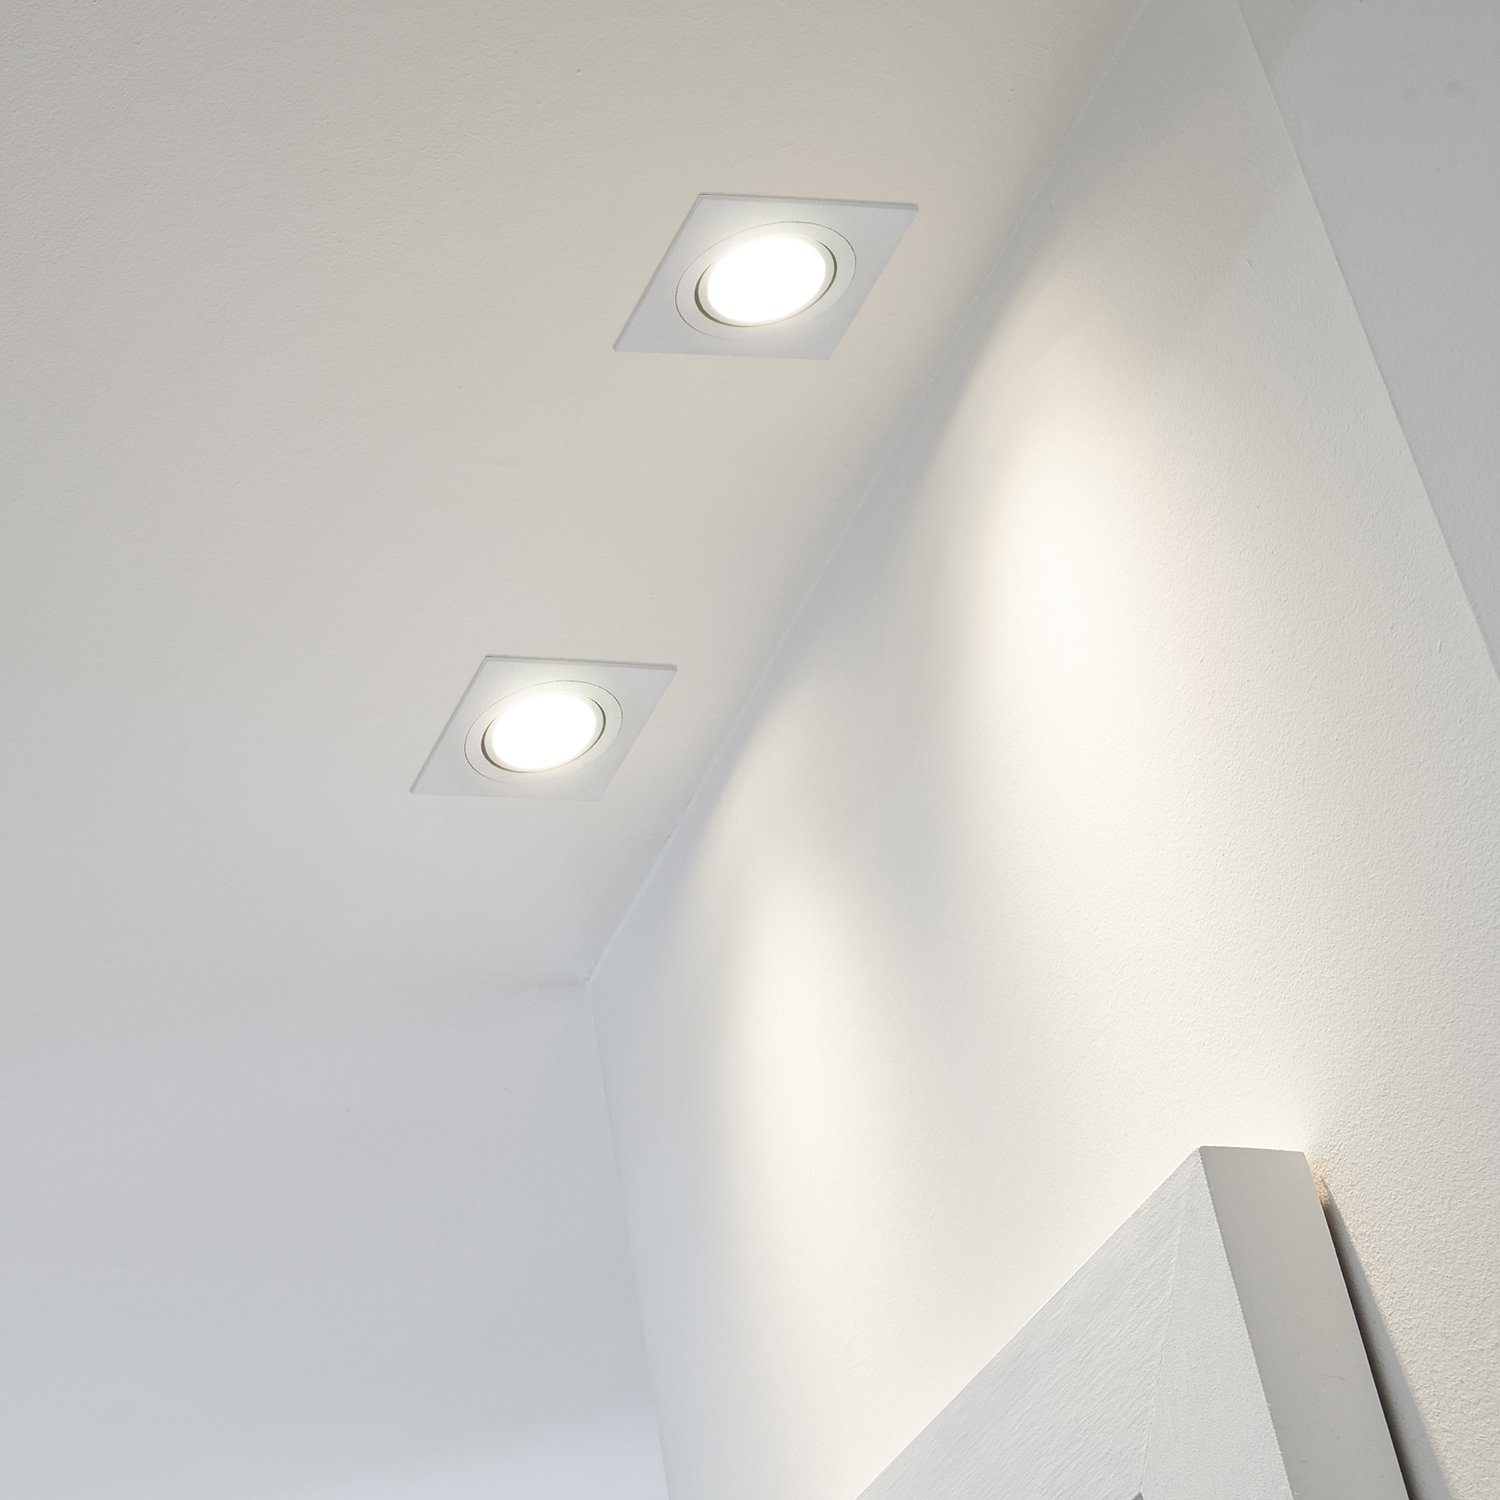 LEDANDO LED 3er Markens / Bicolor GU10 mit Einbaustrahler Einbaustrahler weiß) Set (chrom LED LED